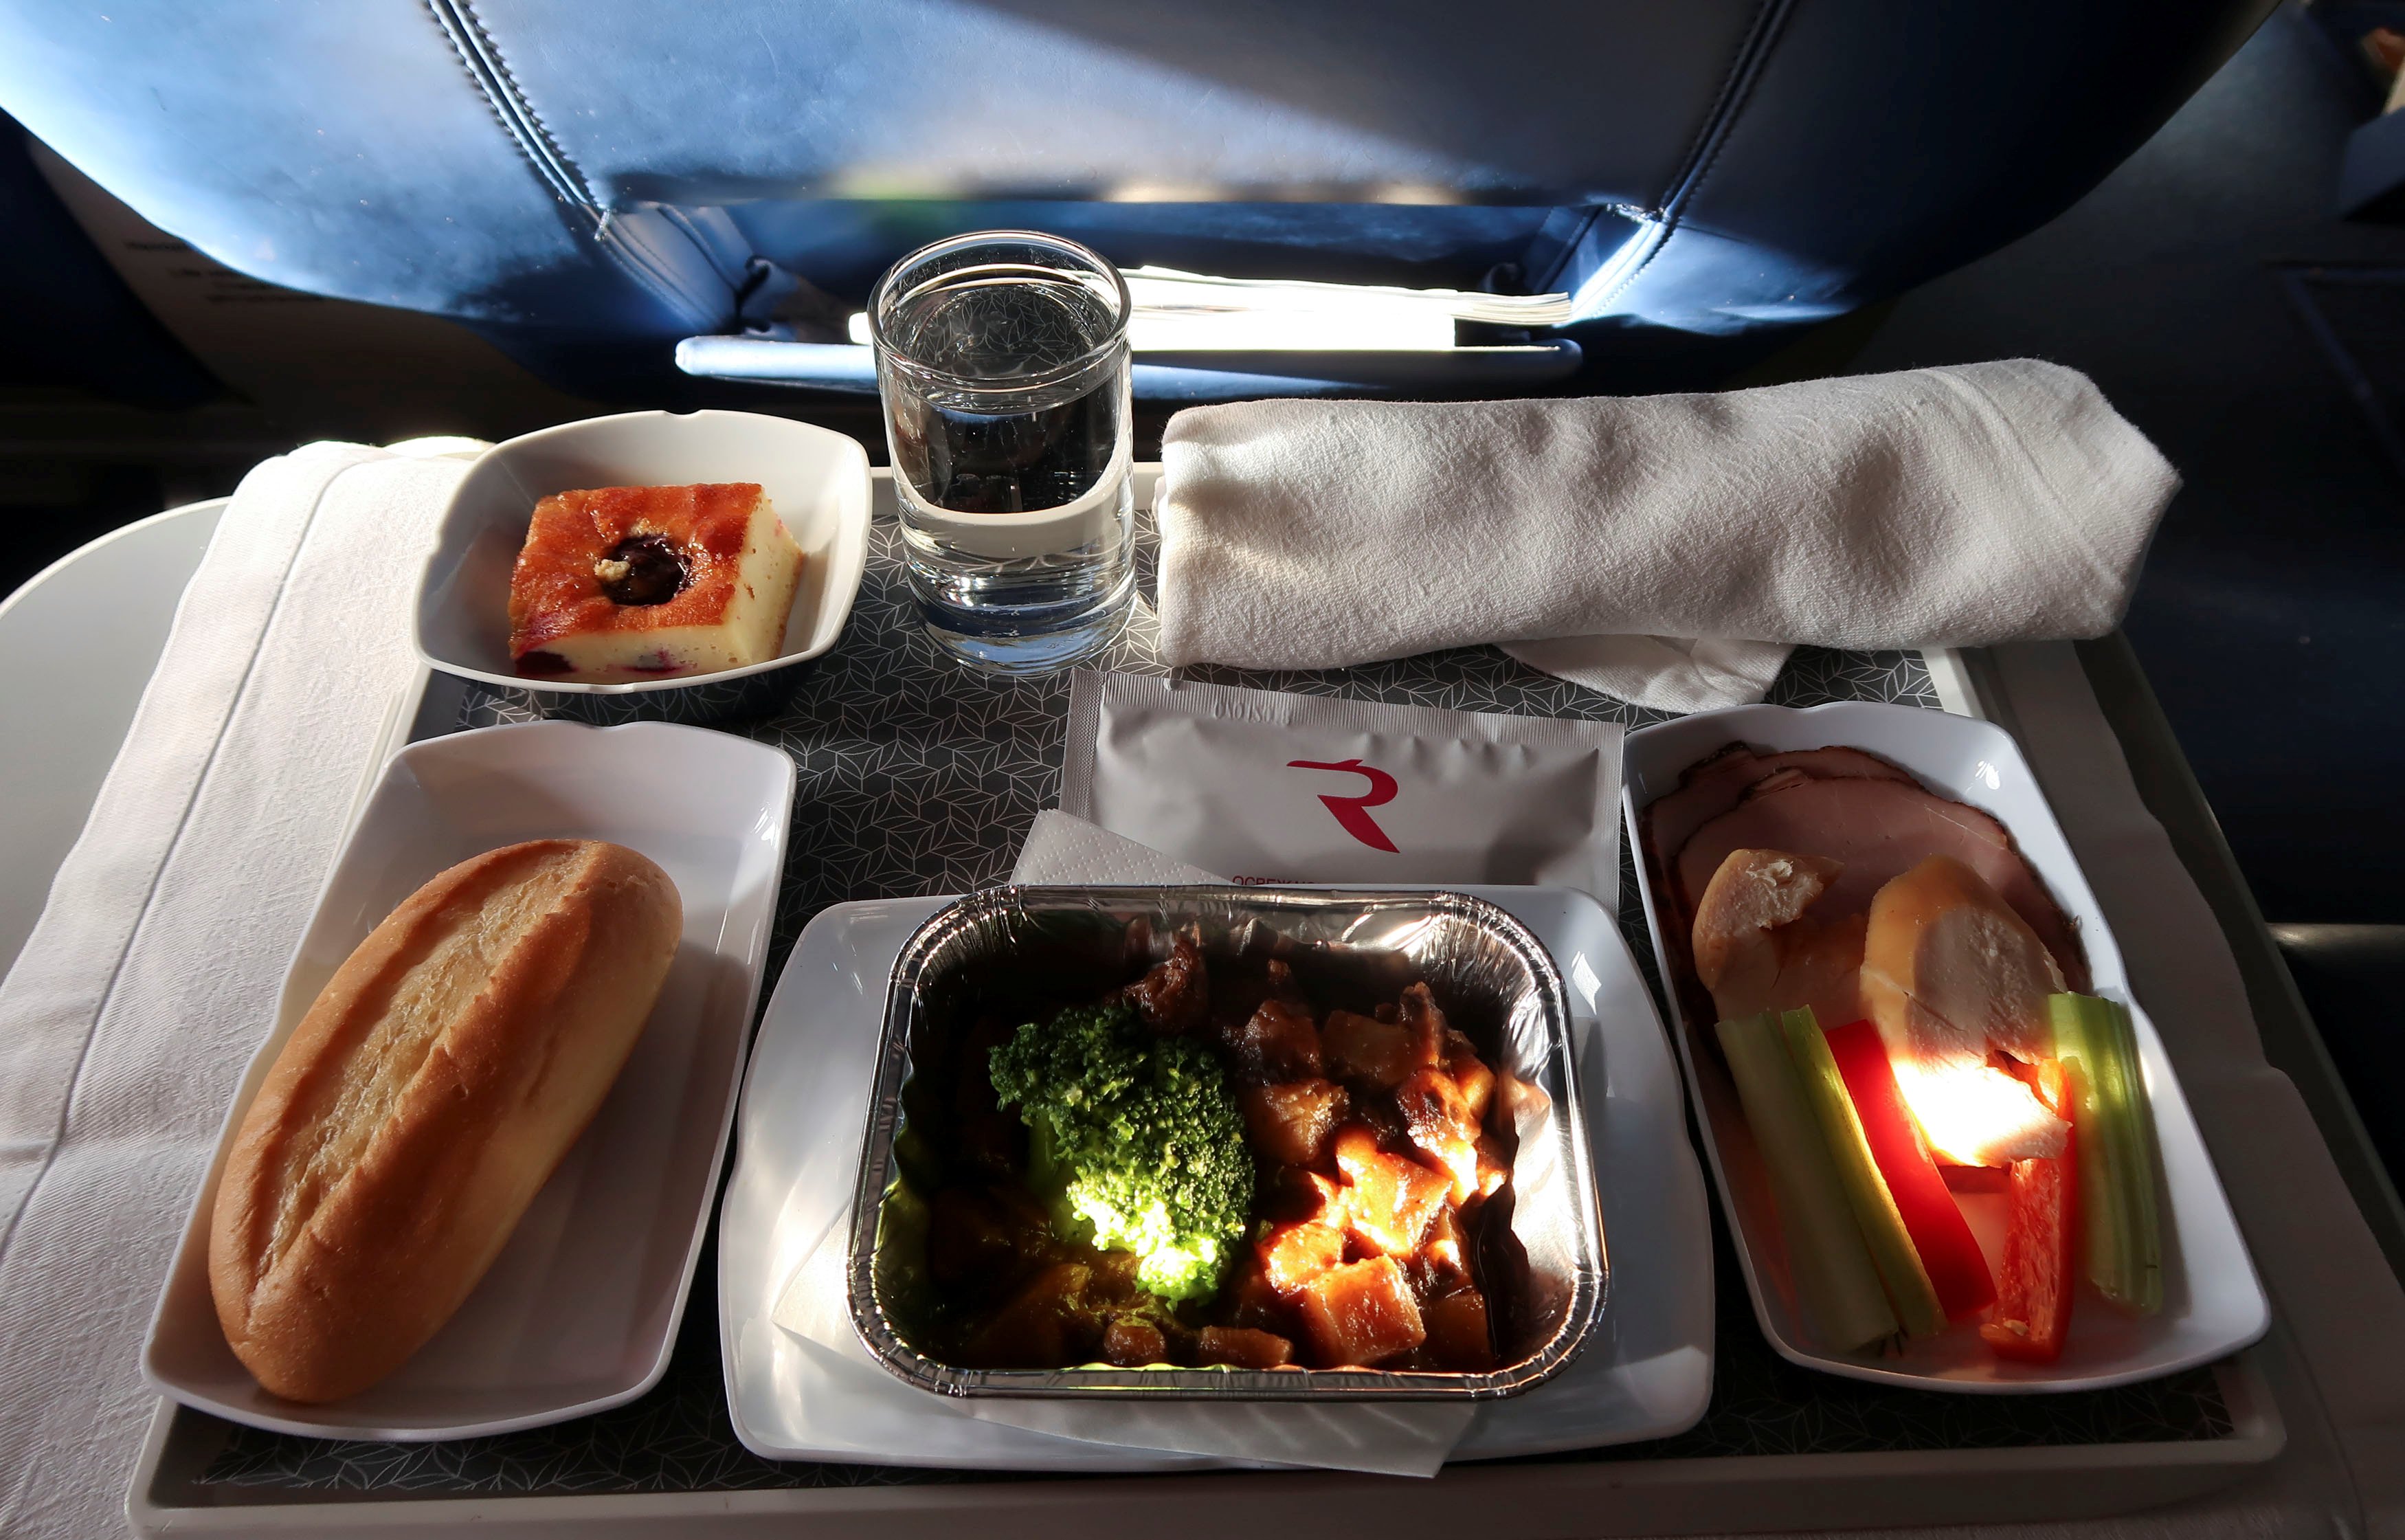 Еду по россии еду до конца. Еда в самолете. Обед в самолете. Перекус в самолет. Бортового питания.